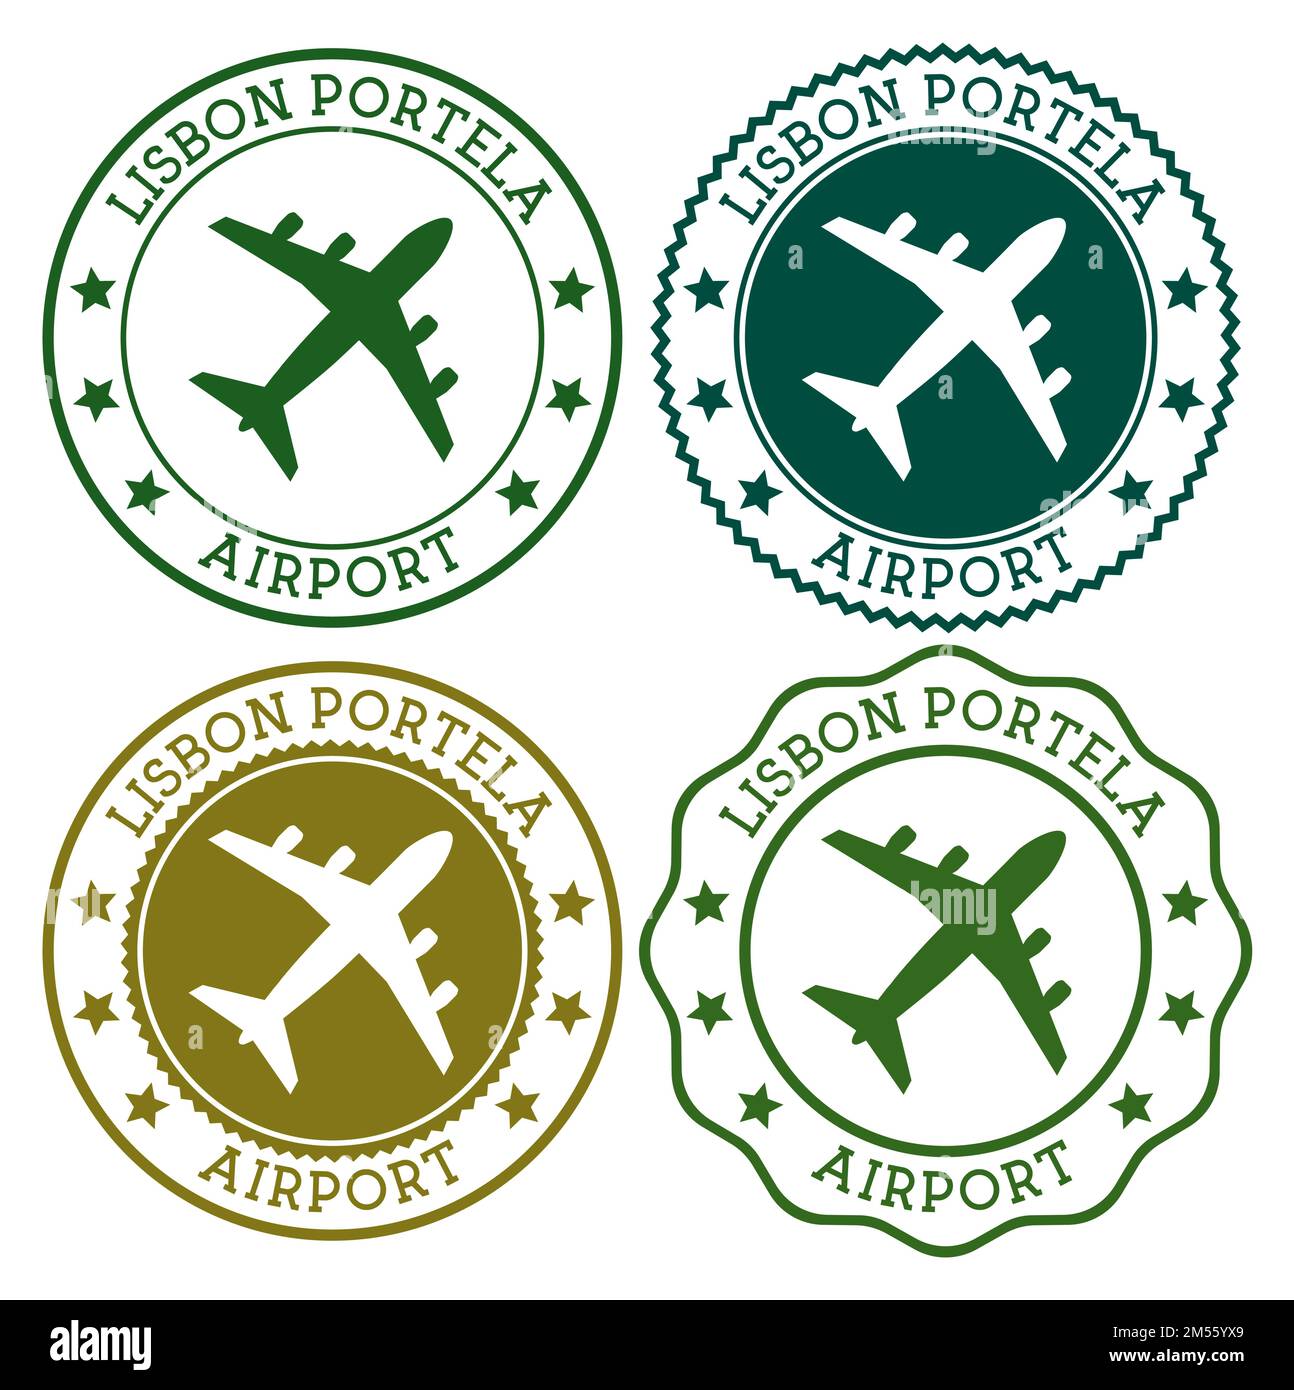 Lisbon Portela Airport. Lisbon airport logo. Flat stamps in material color palette. Vector illustration. Stock Vector